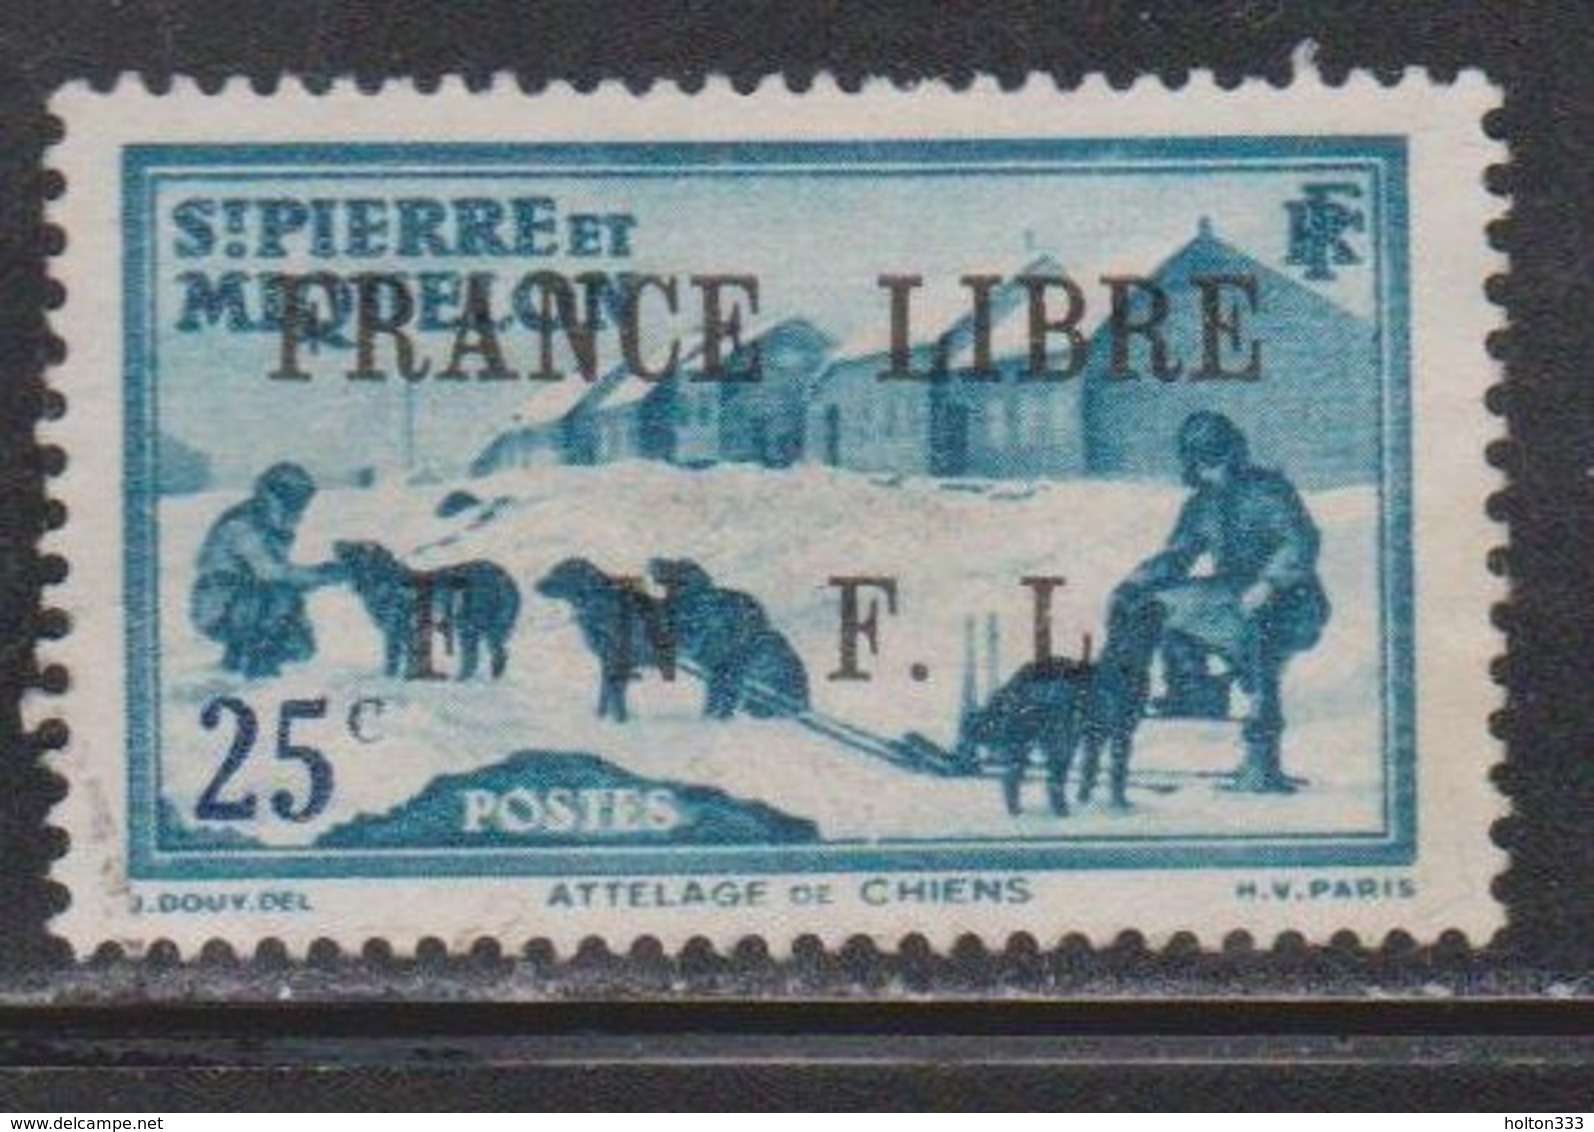 ST PIERRE & MIQUELON Scott # 229 Used - Dog Team With France Libre FNFL Overprint - Gebruikt